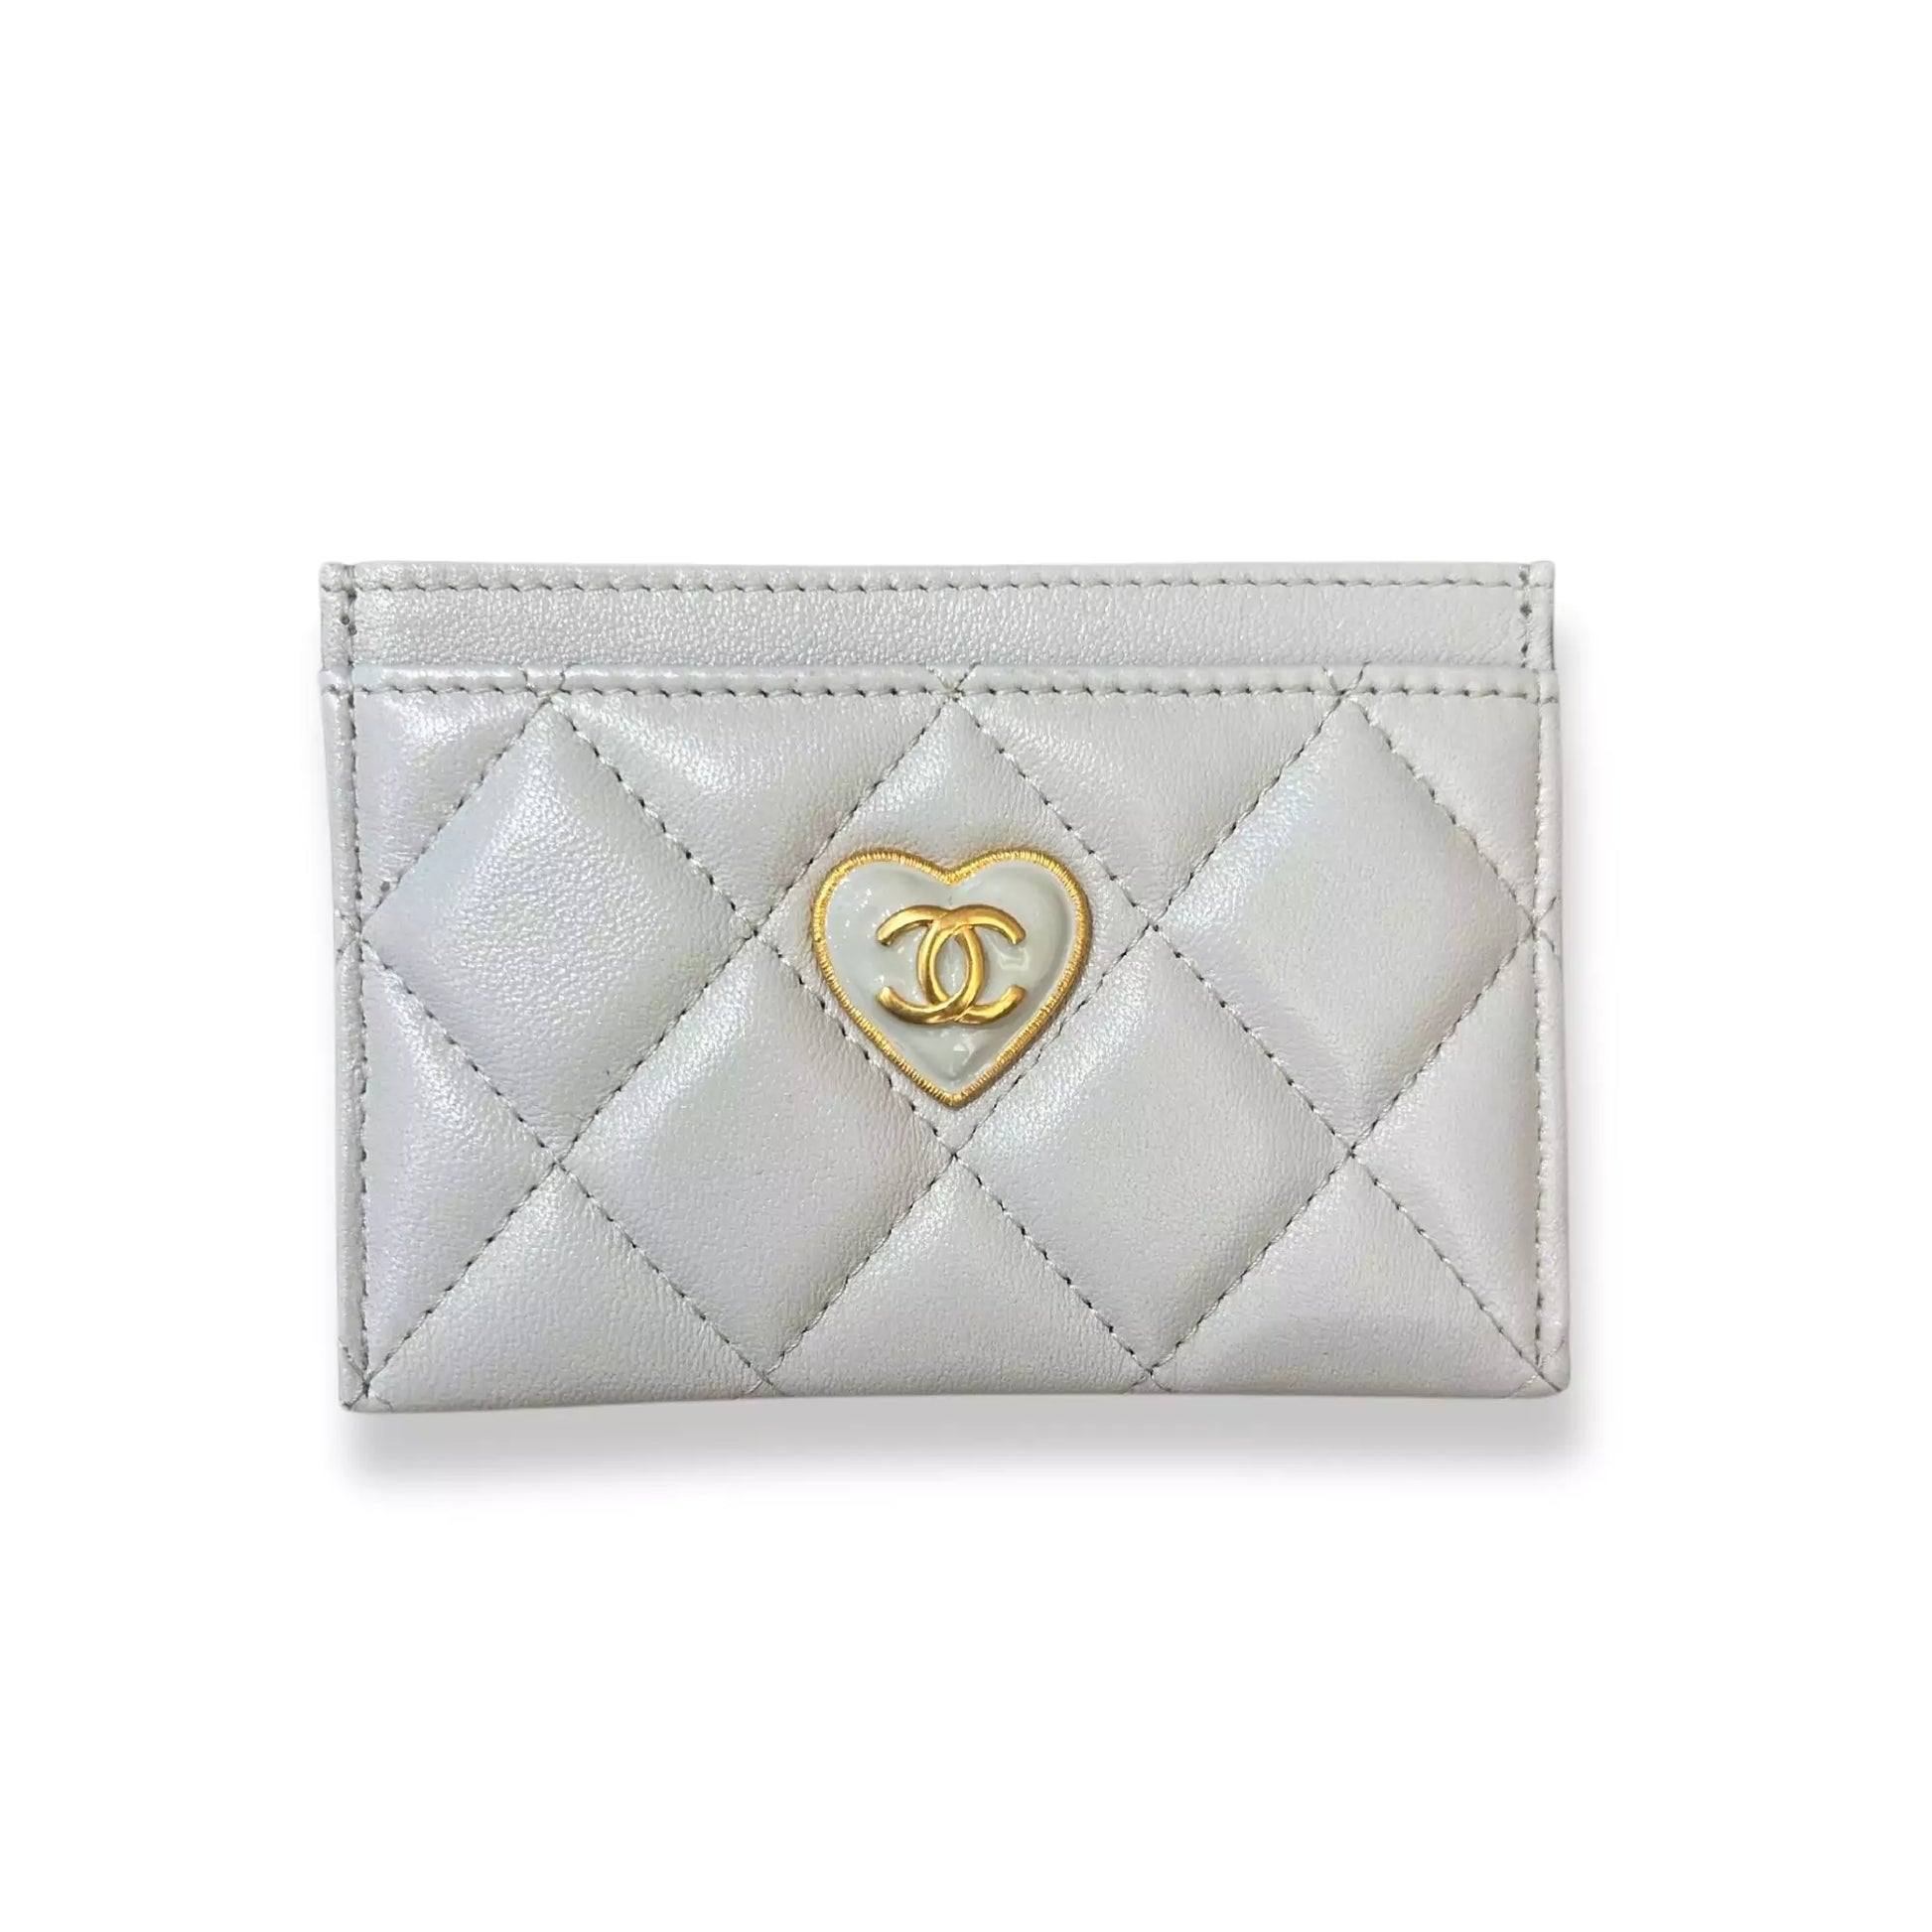 Chanel card holder lambskin leather black silver